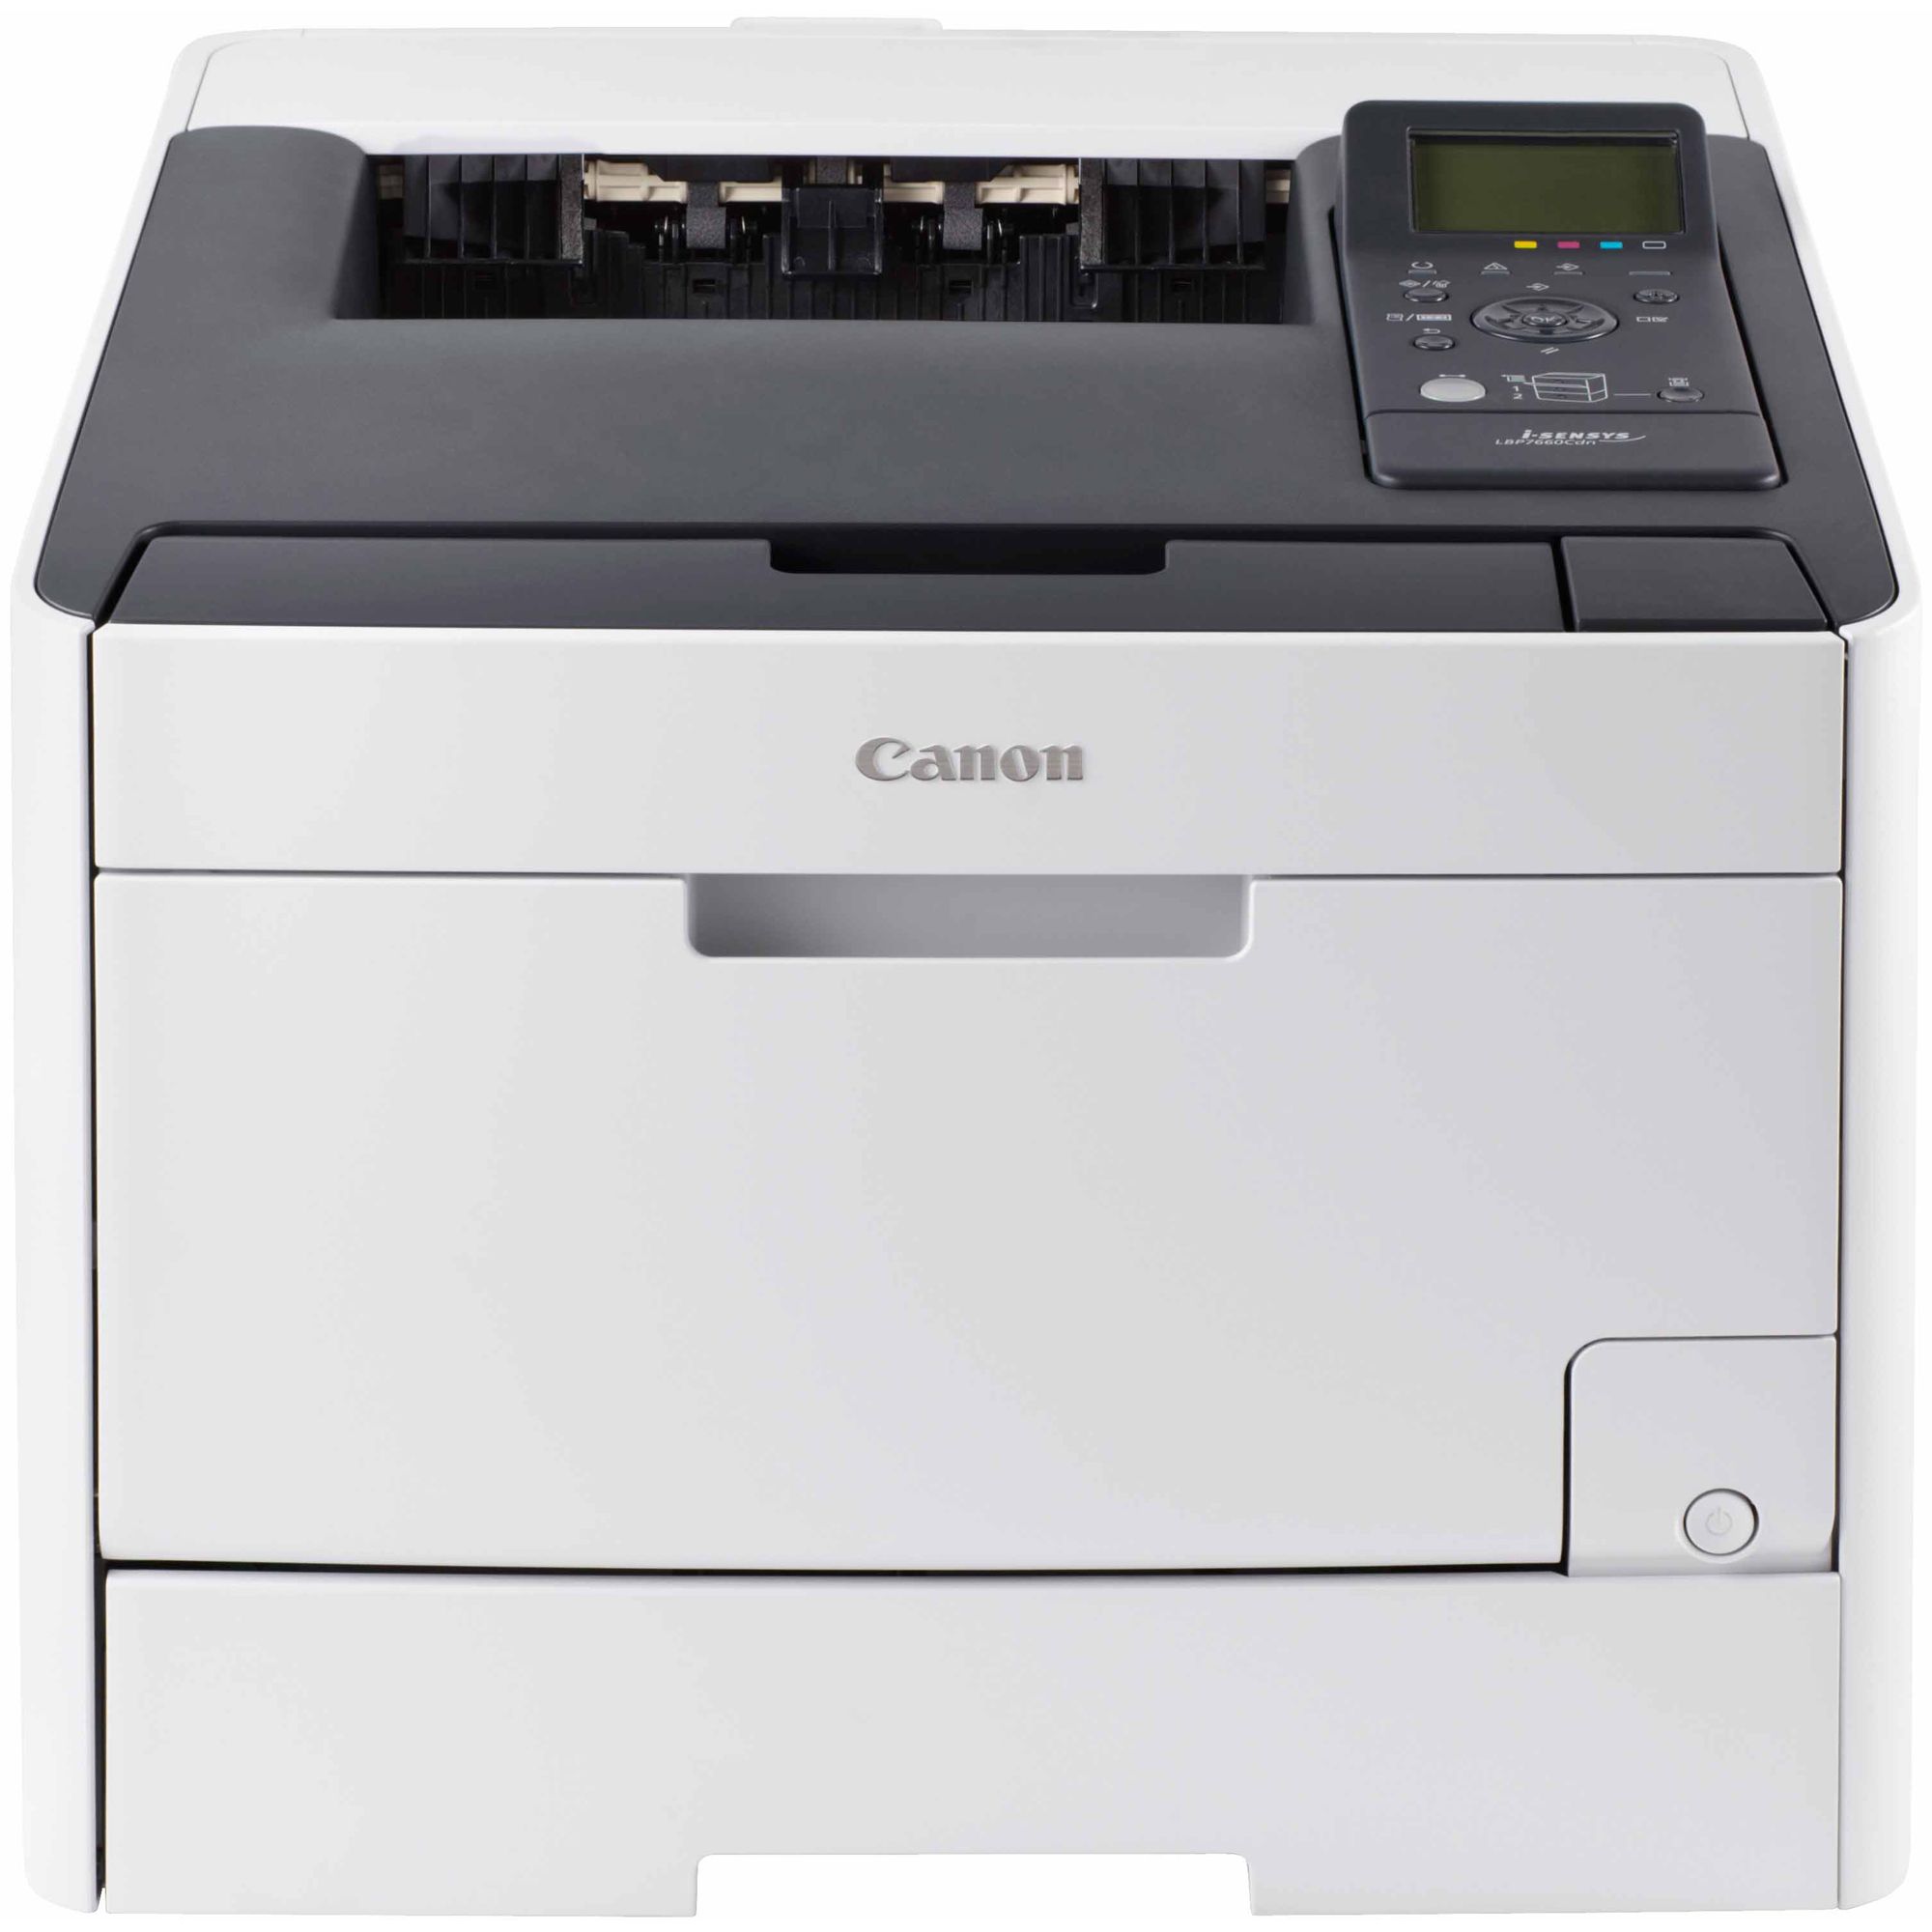  Imprimanta laser color Canon LBP7660CDN, A4 